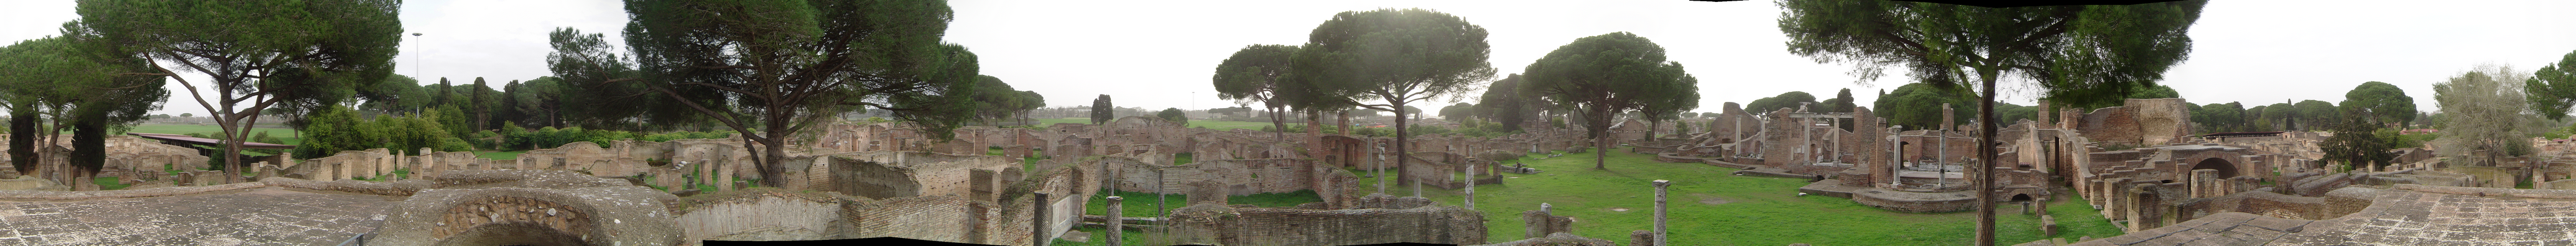 The beautifully preserved rui